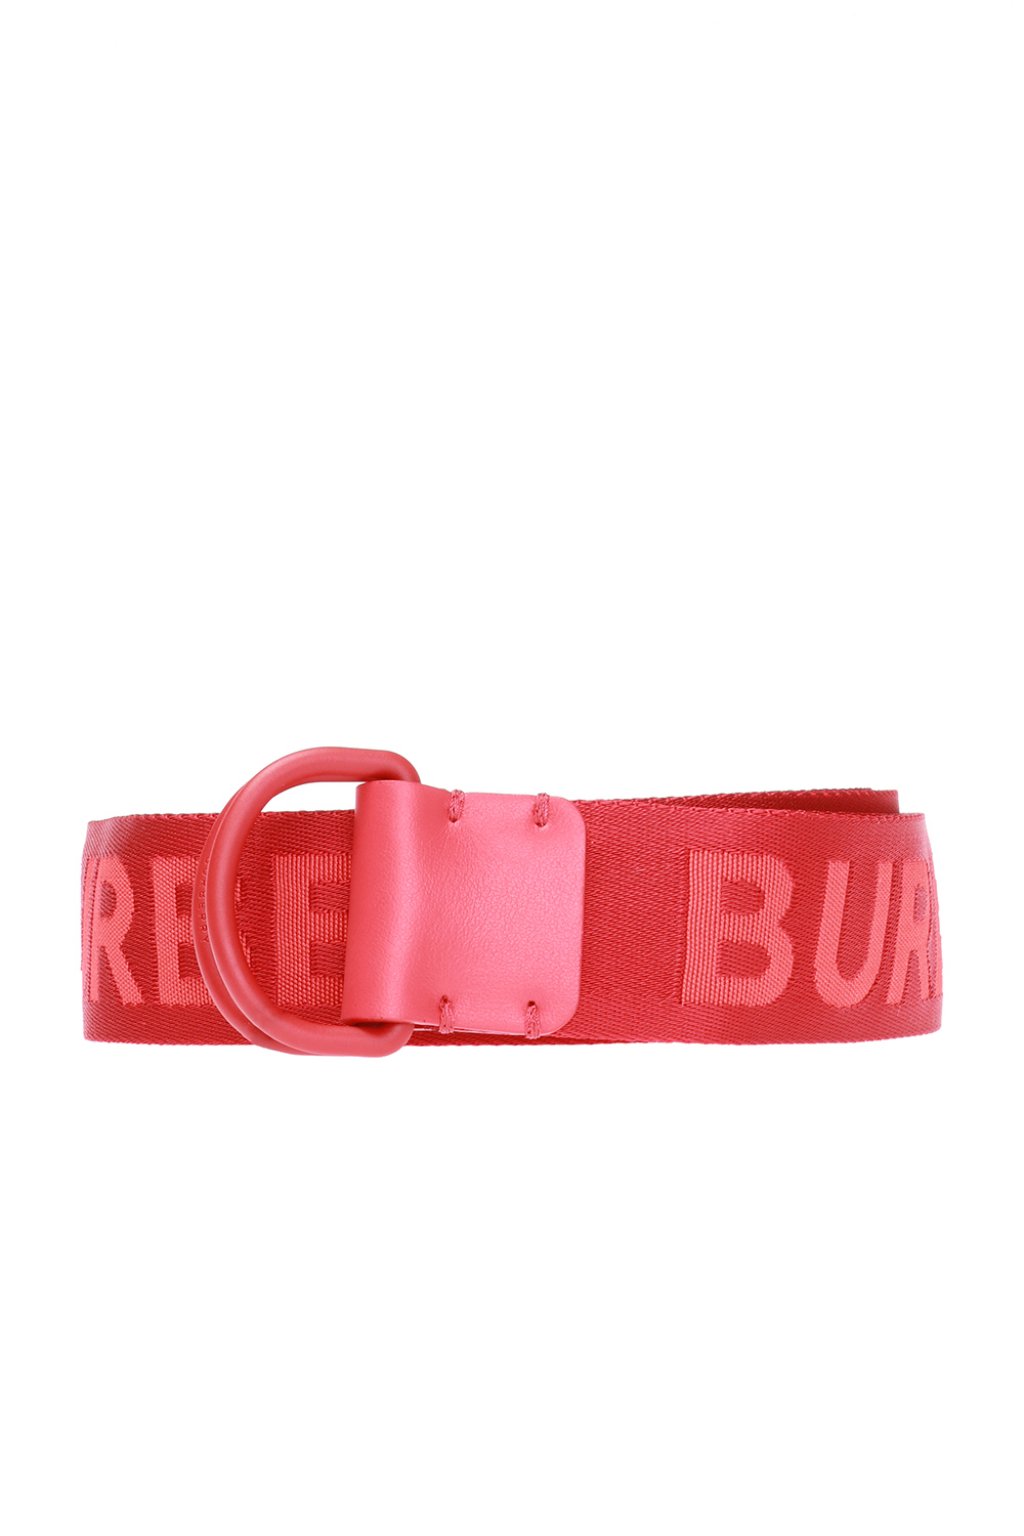 red burberry belt